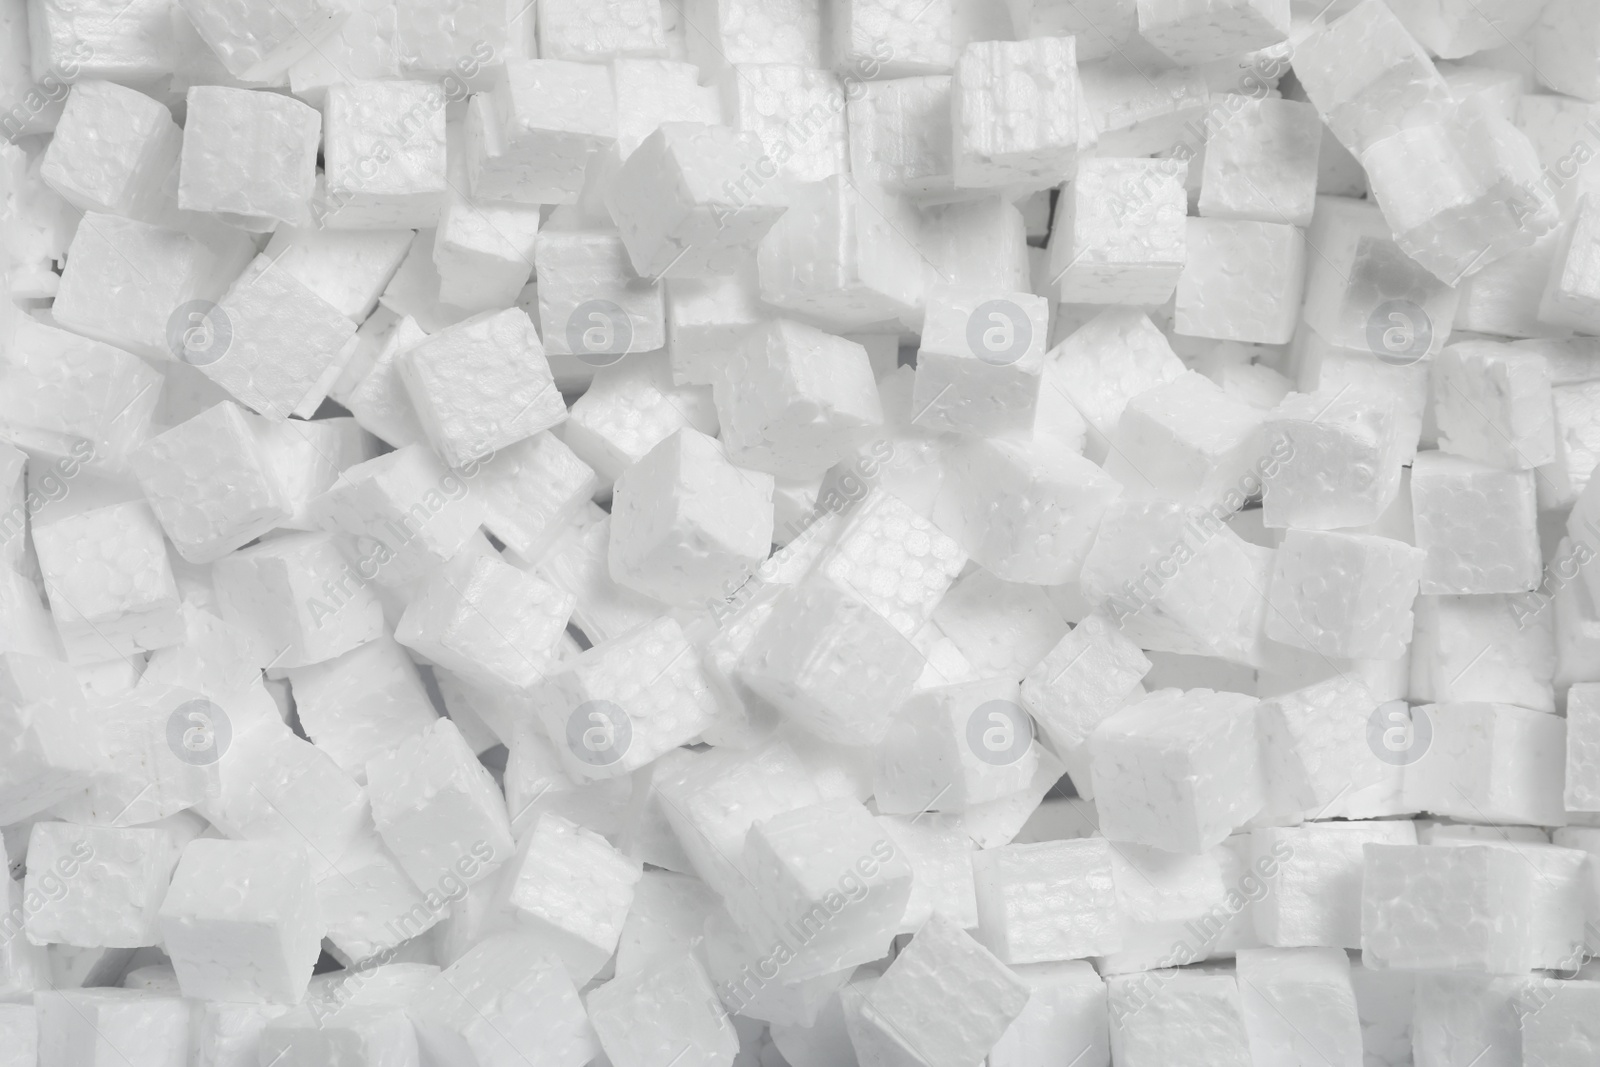 Photo of Pile of styrofoam cubes as background, closeup